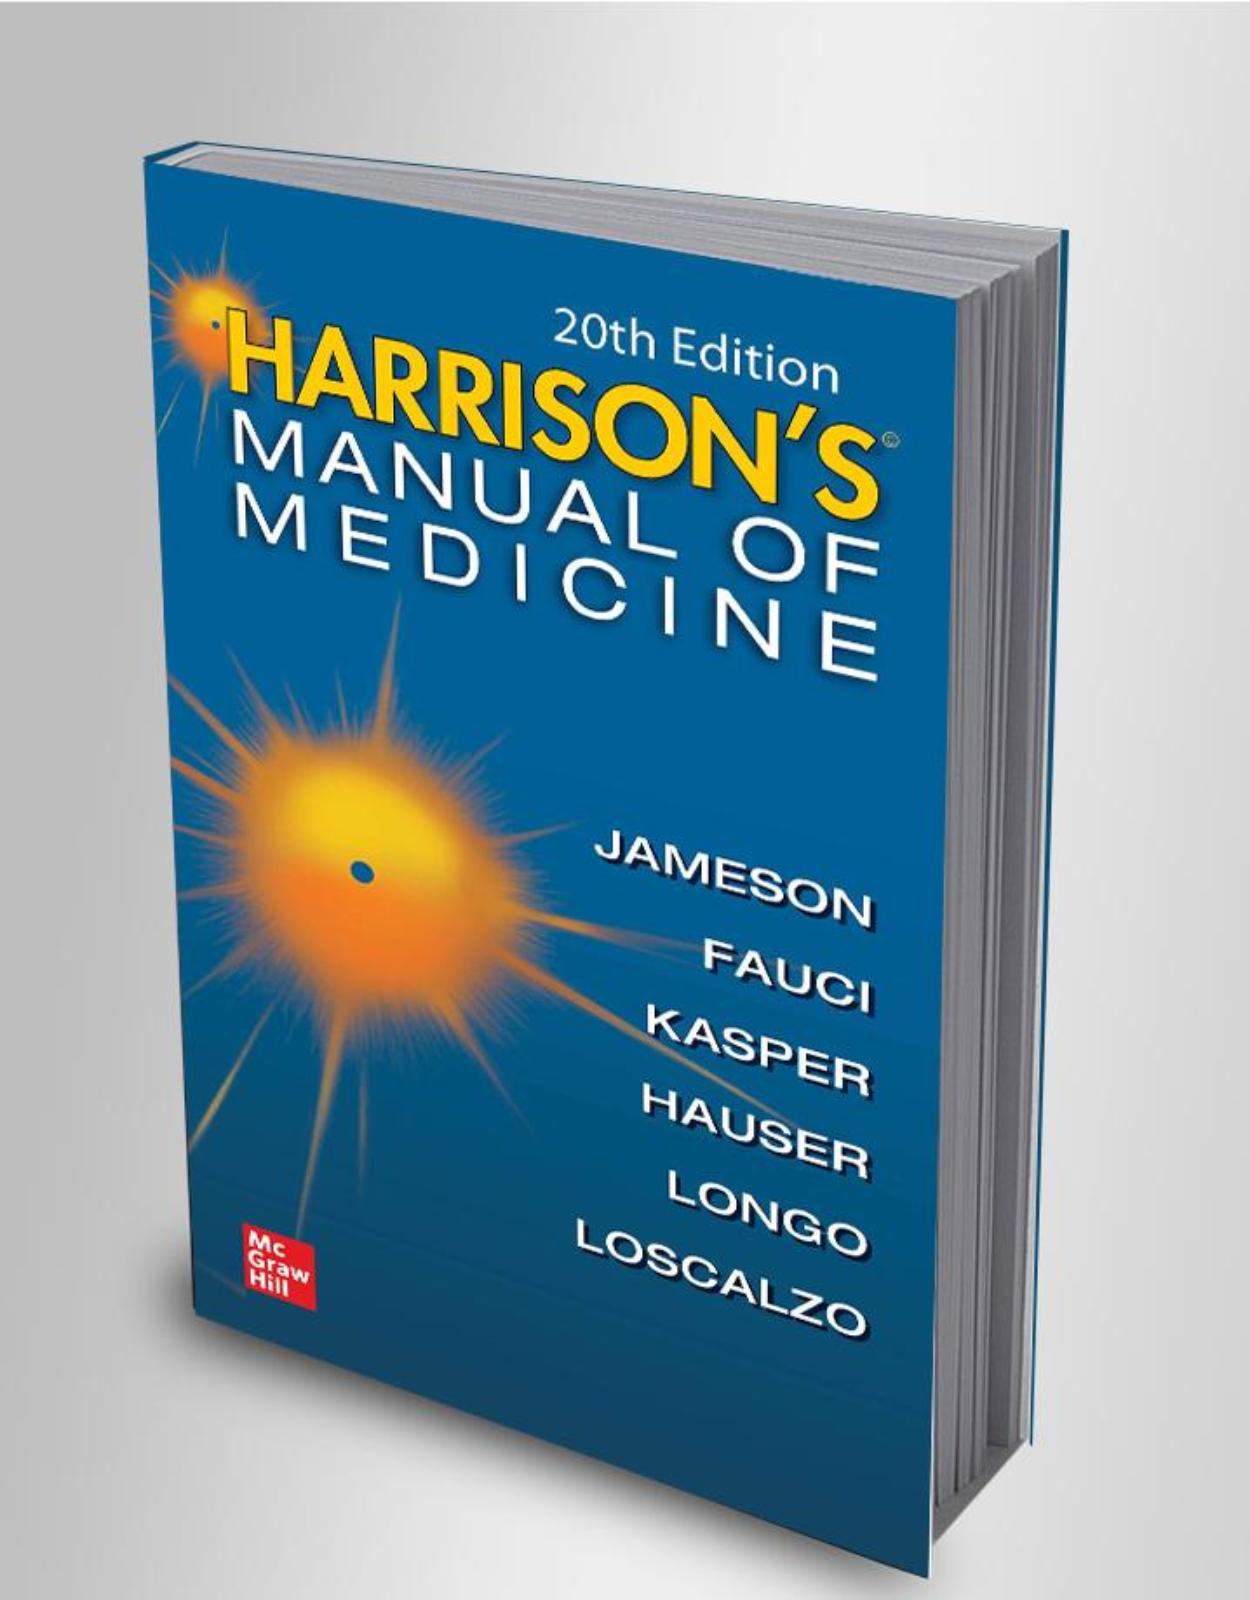 Harrisons Manual of Medicine, 20th Edition 